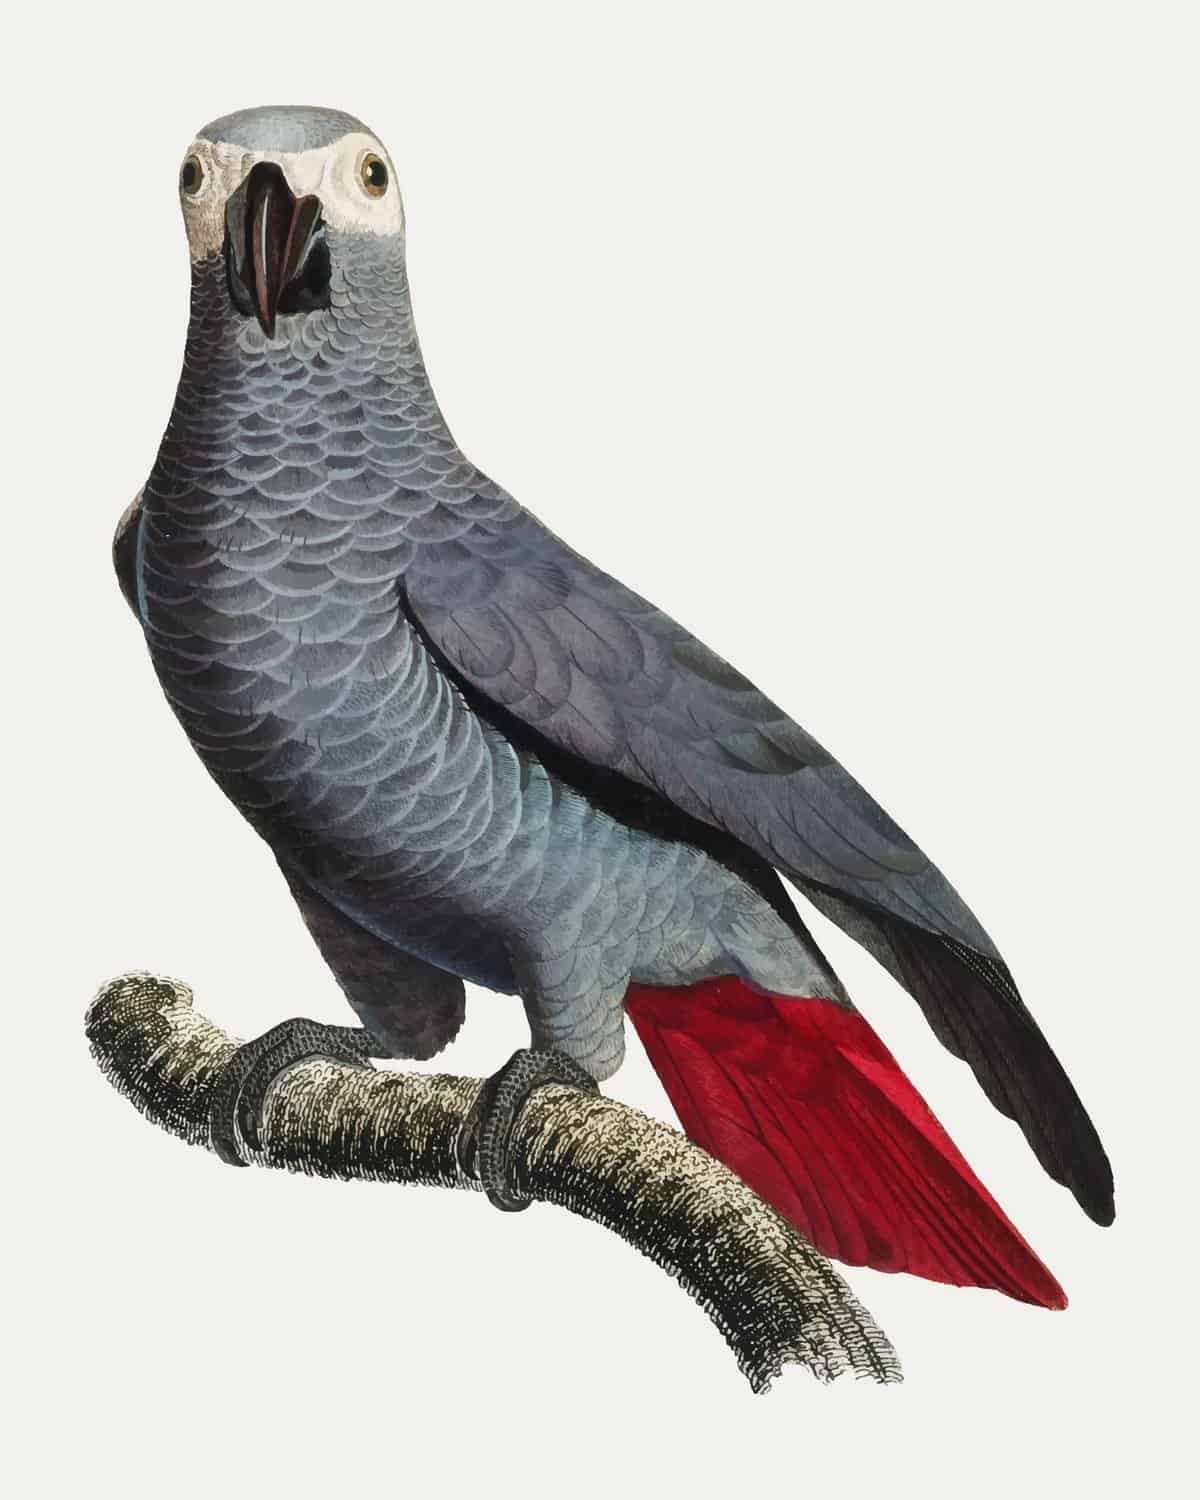 Congo grey parrot